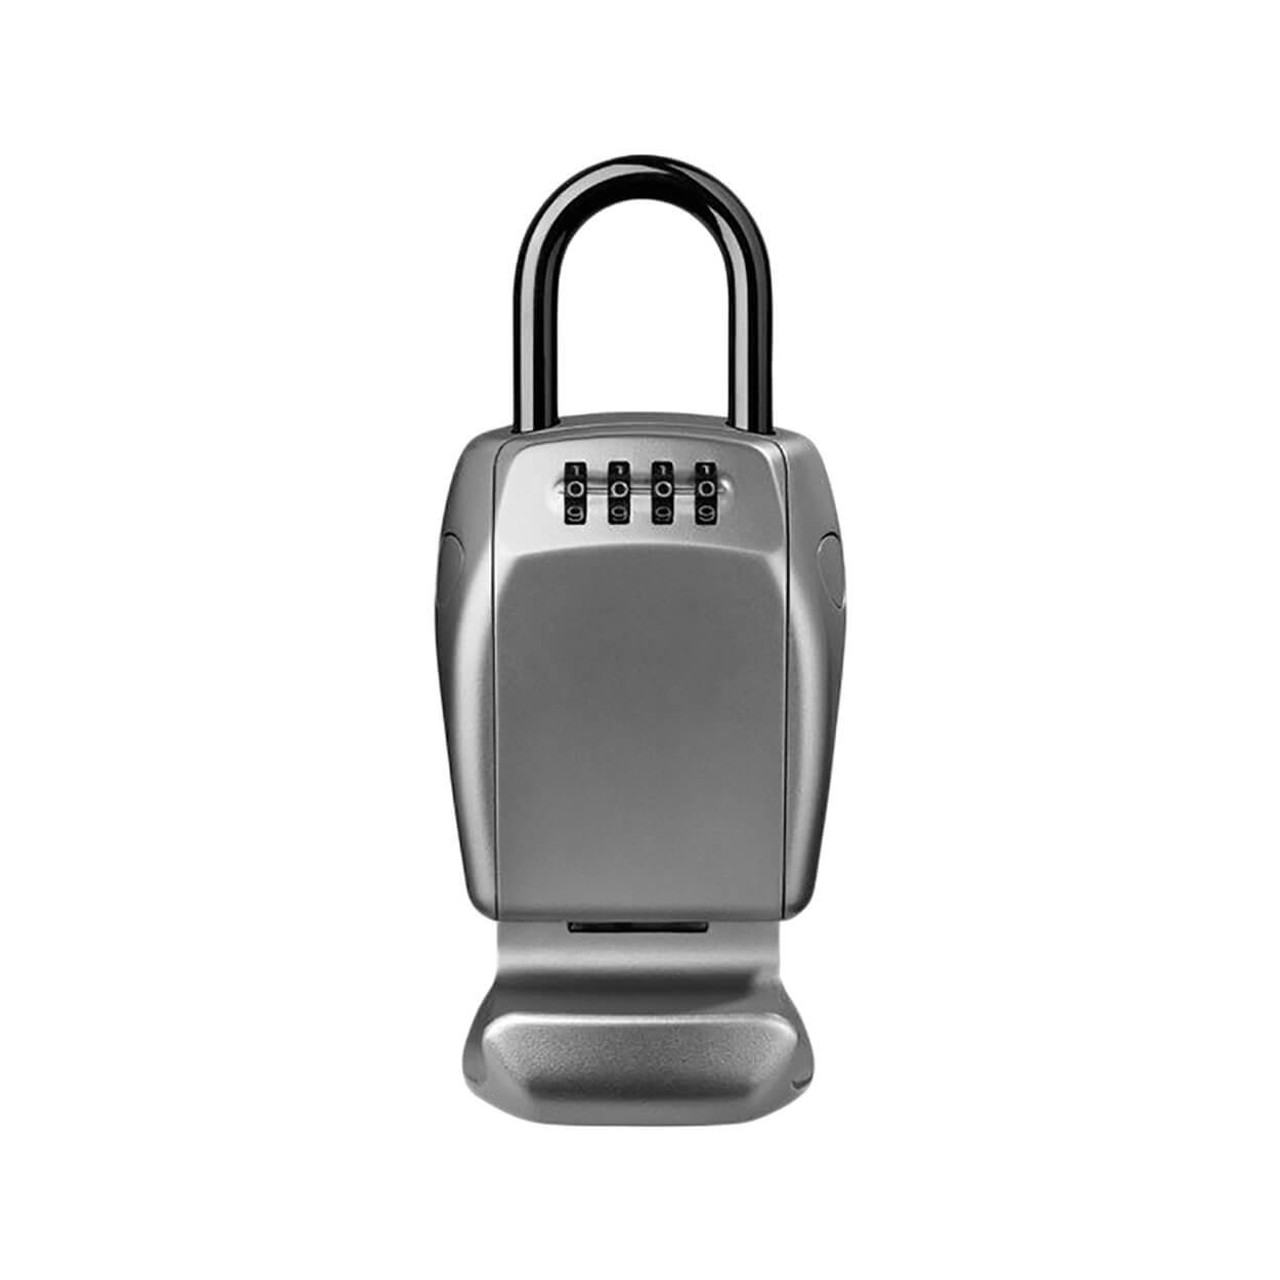  Master Lock Portable Key Storage 5414EURD 